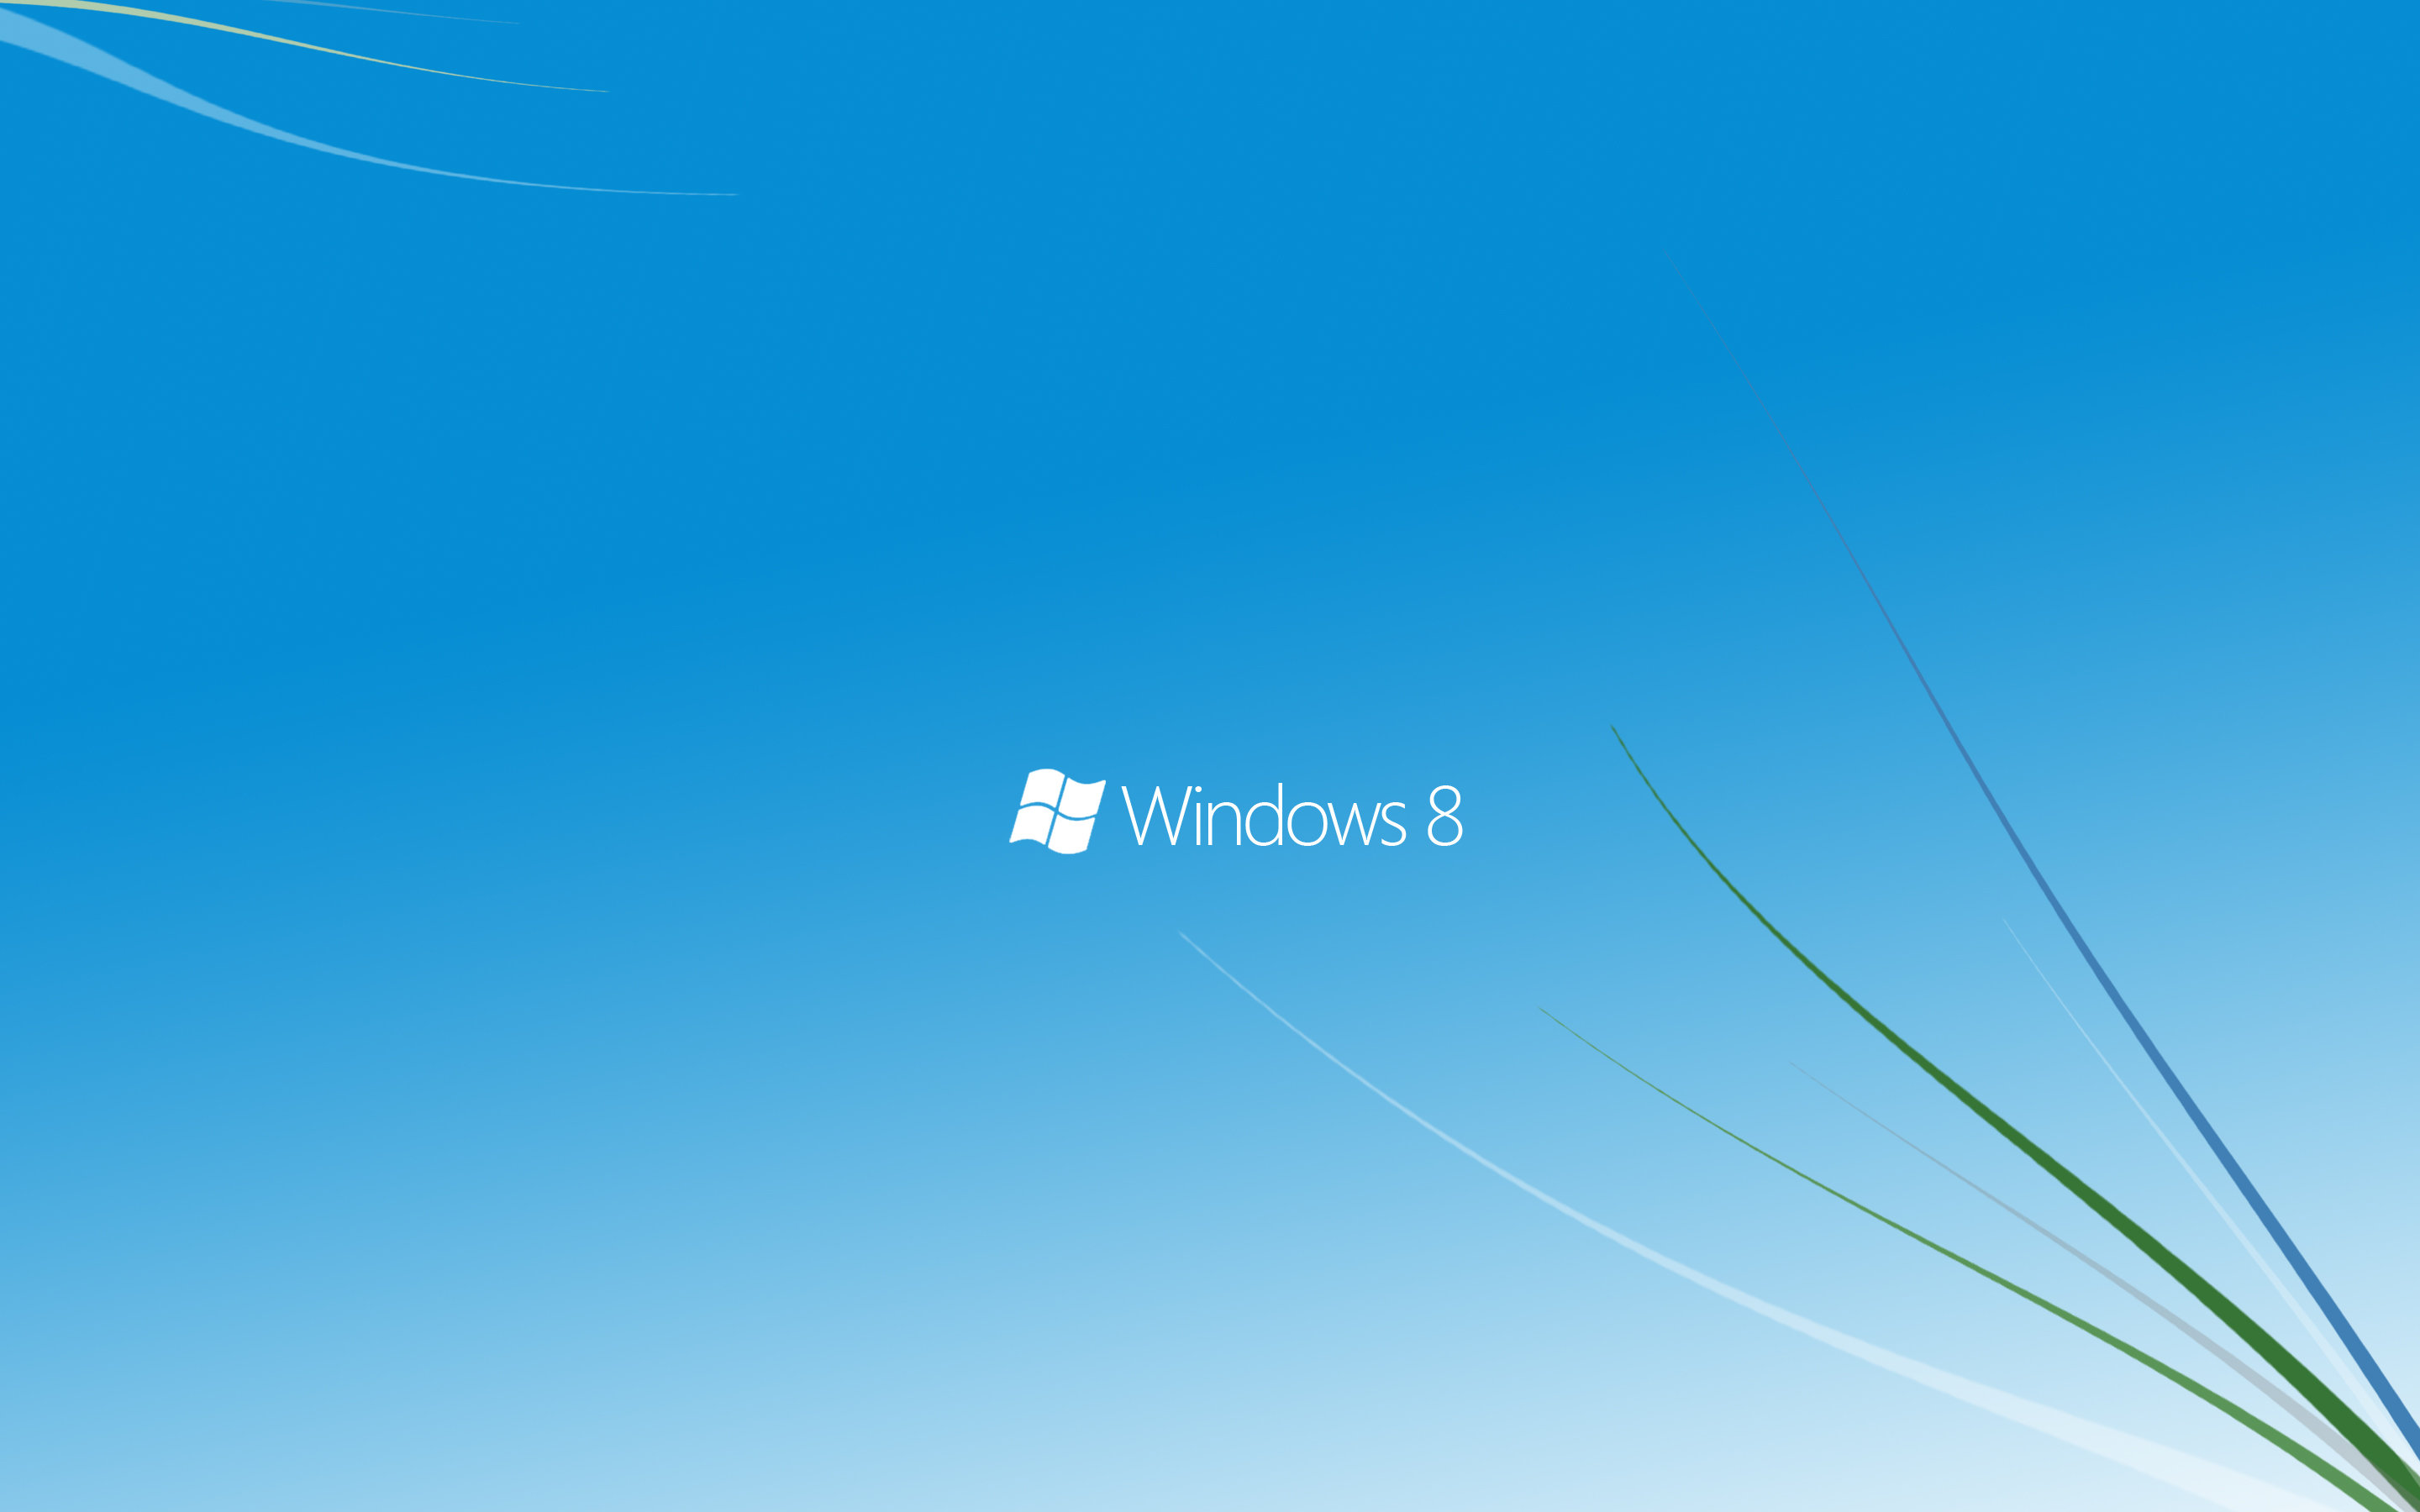 High resolution Windows 8 hd 2880x1800 background ID:78099 for desktop